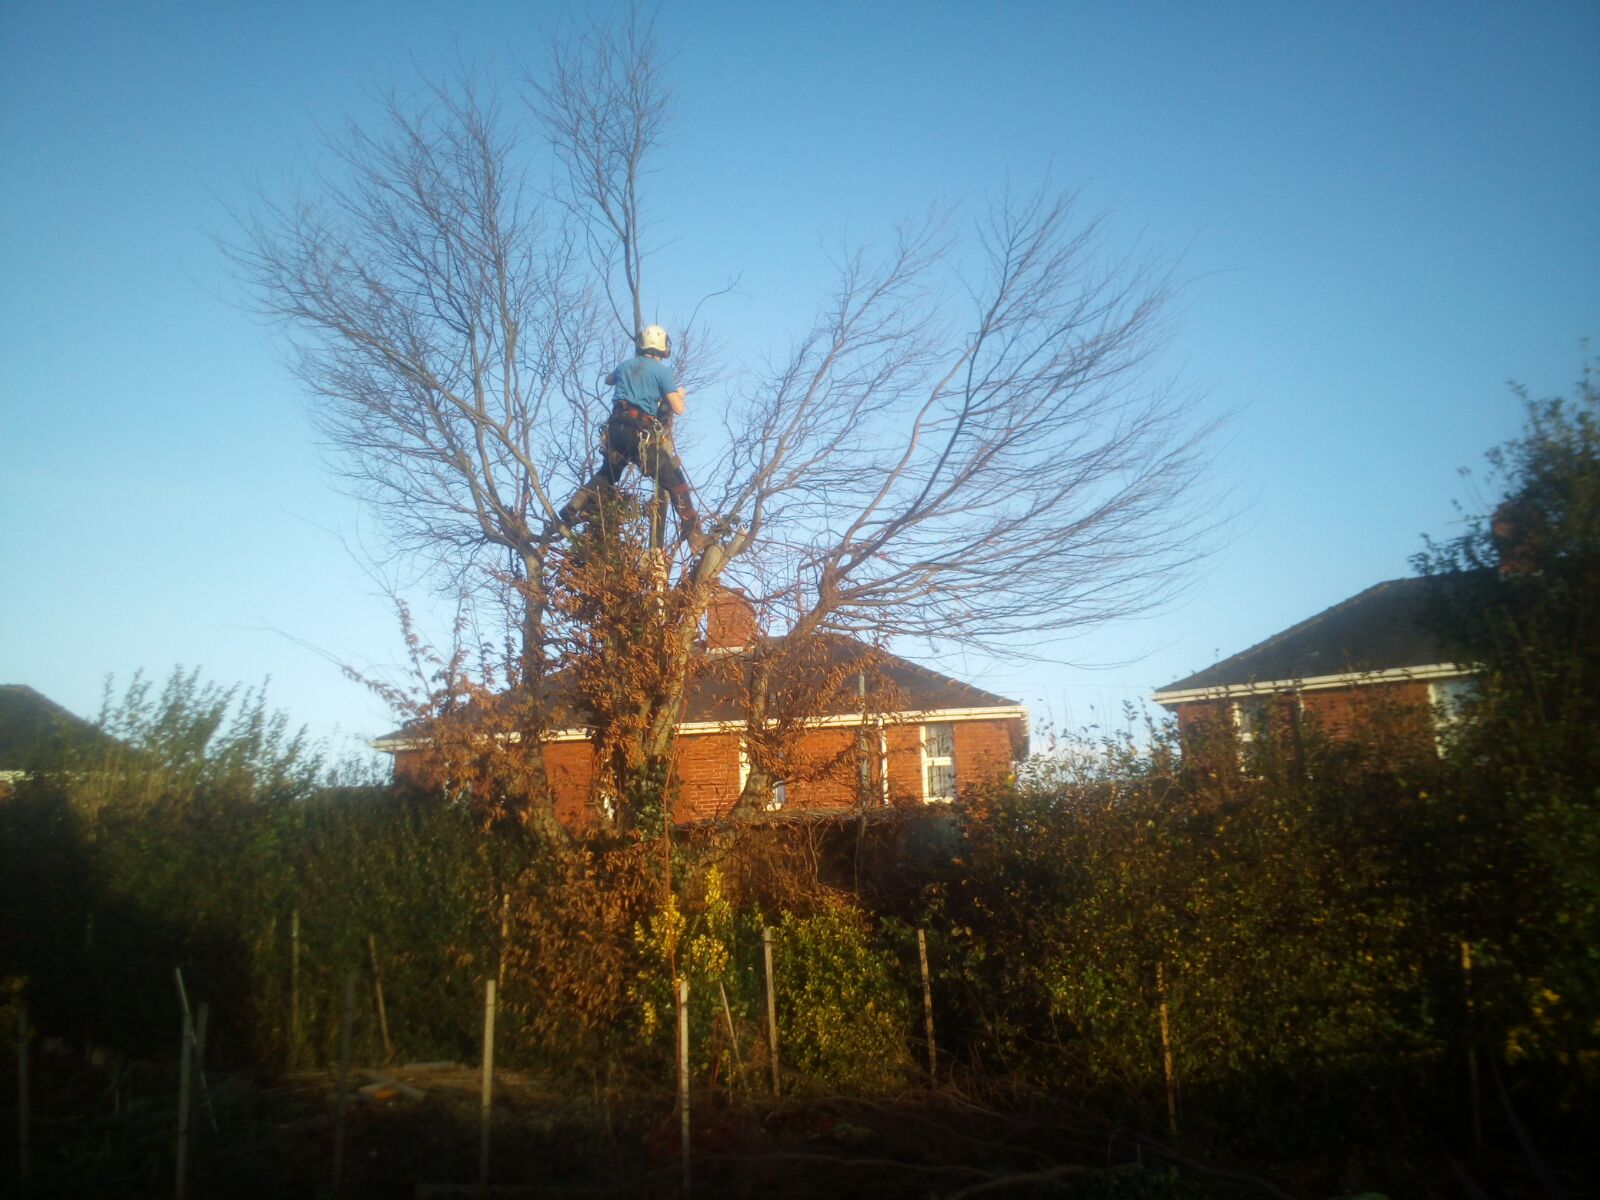 Tree surgeon dismantling tree in hedge line